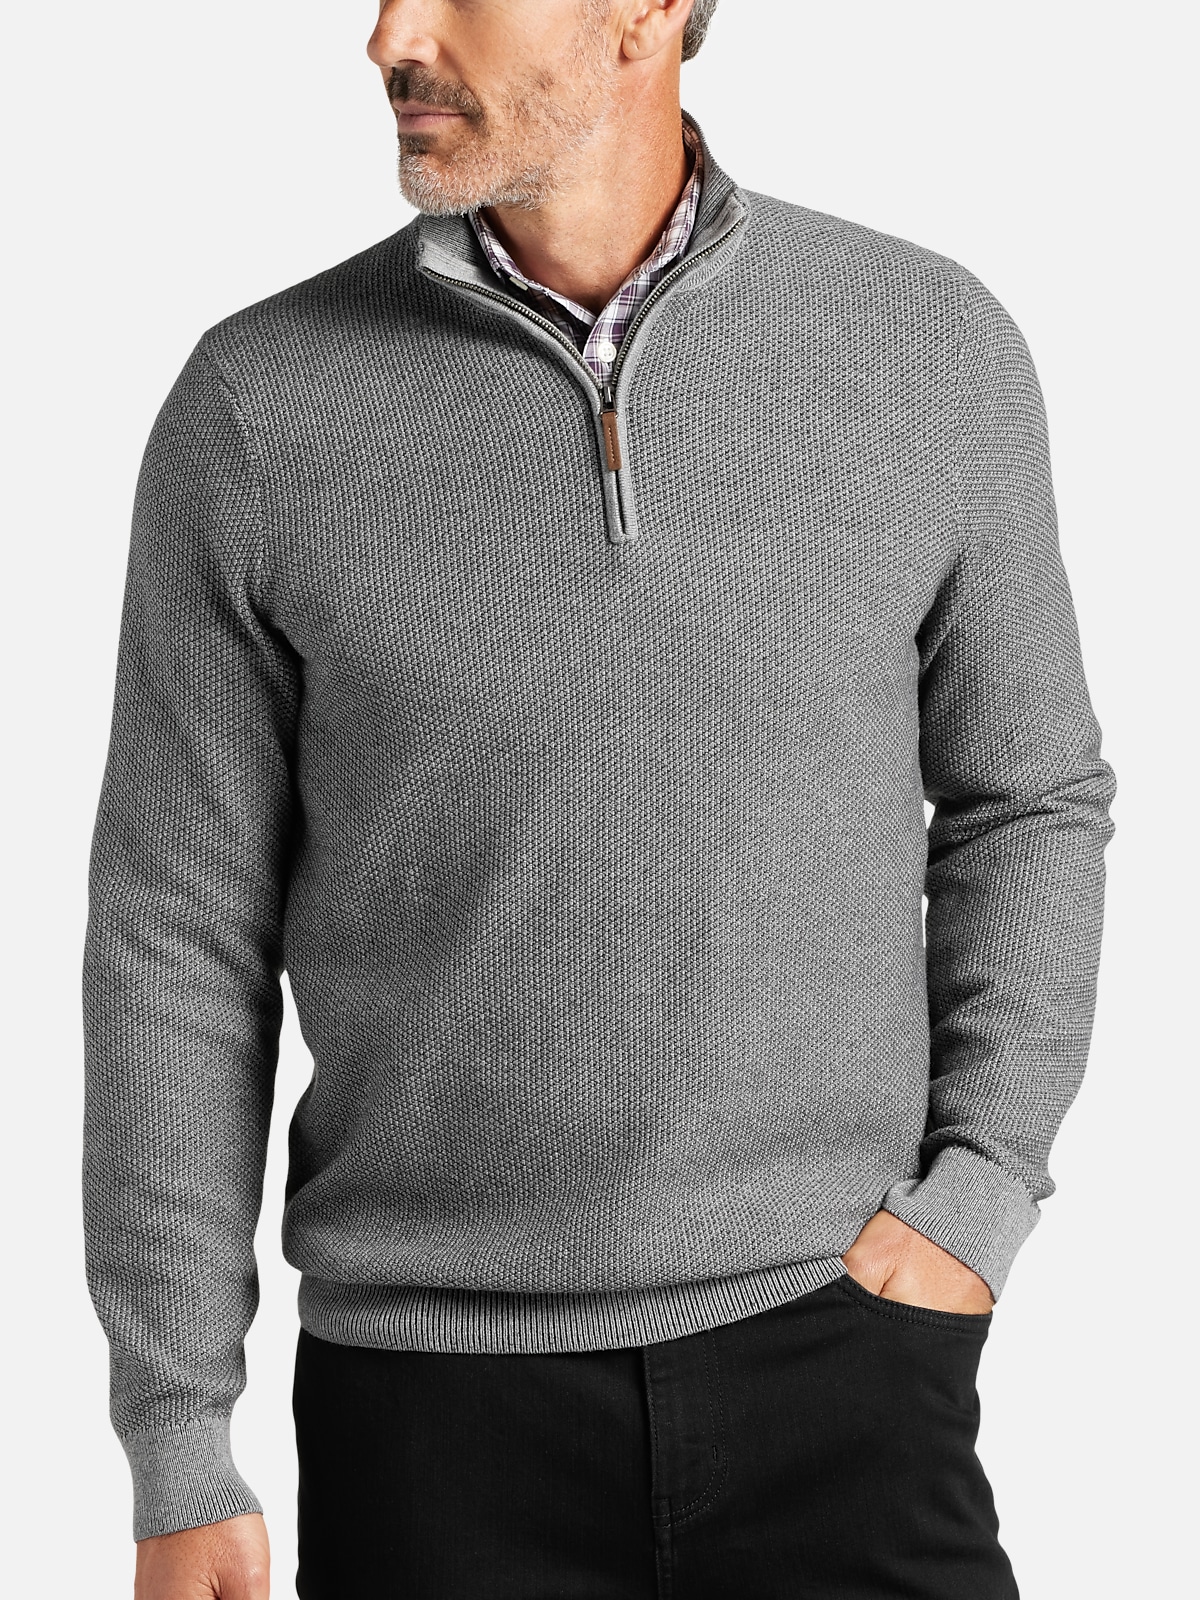 Joseph Abboud Modern Fit 1/4 Zip Sweater | All Clearance $39.99| Men's ...